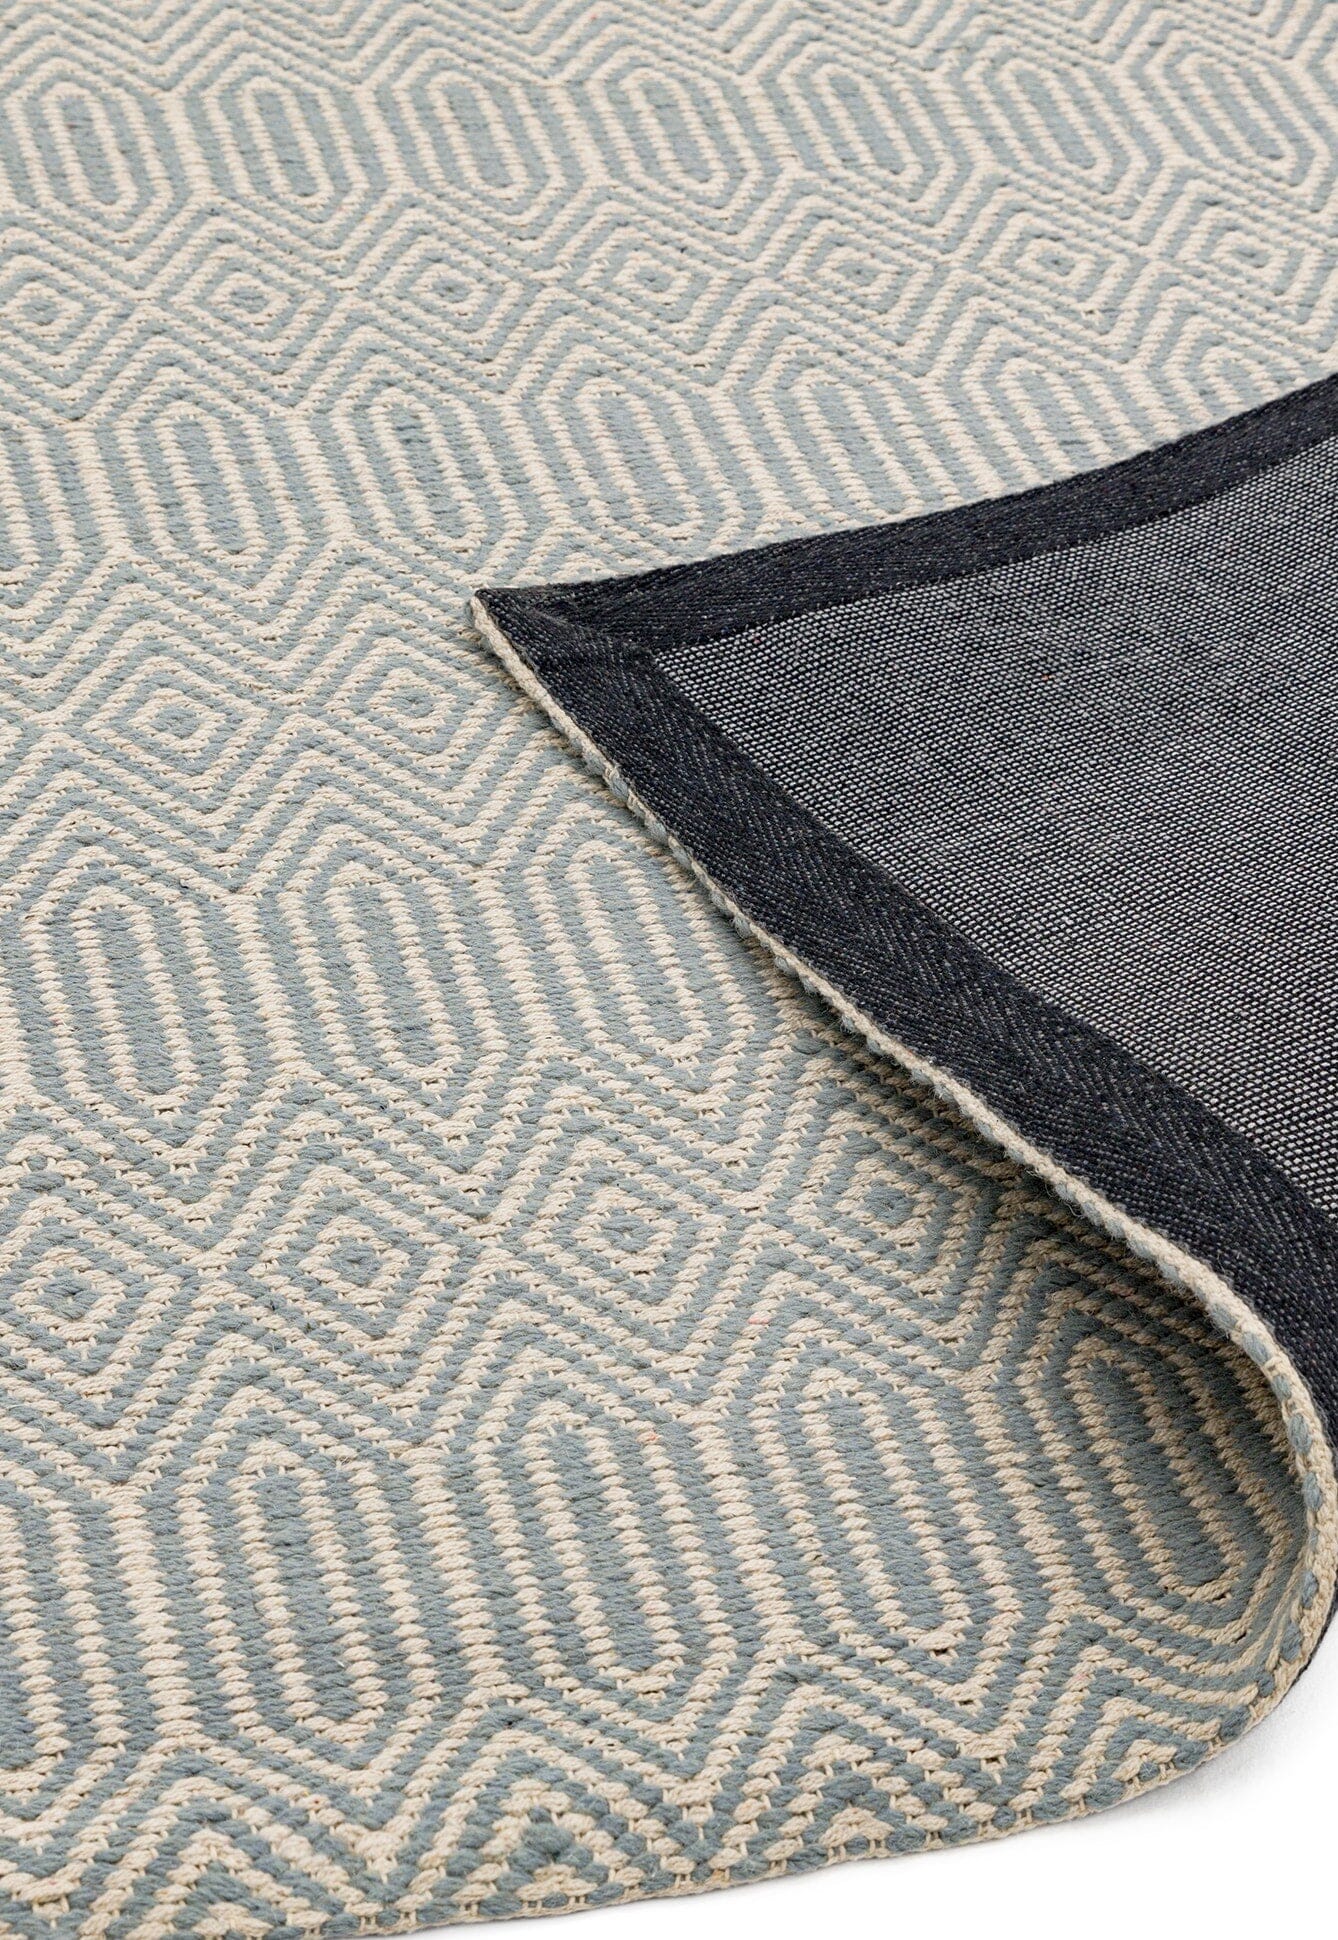 Asiatic Carpets Sloan Hand Woven Rug Duck Egg - 160 x 230cm